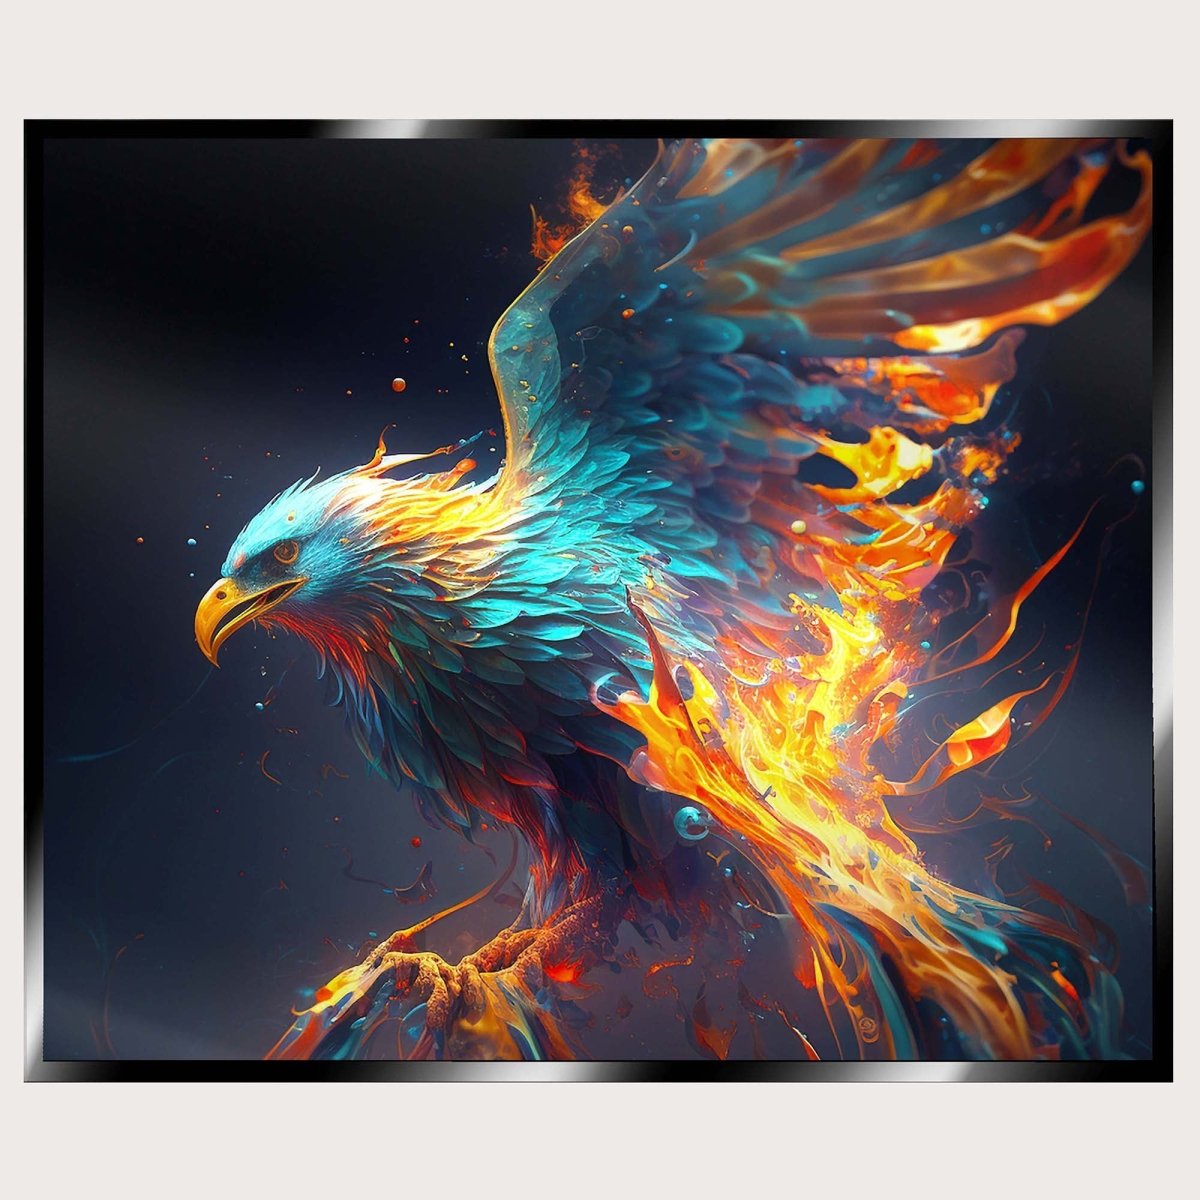 Illuminated Wall Art - Flying Eagle - madaboutneon